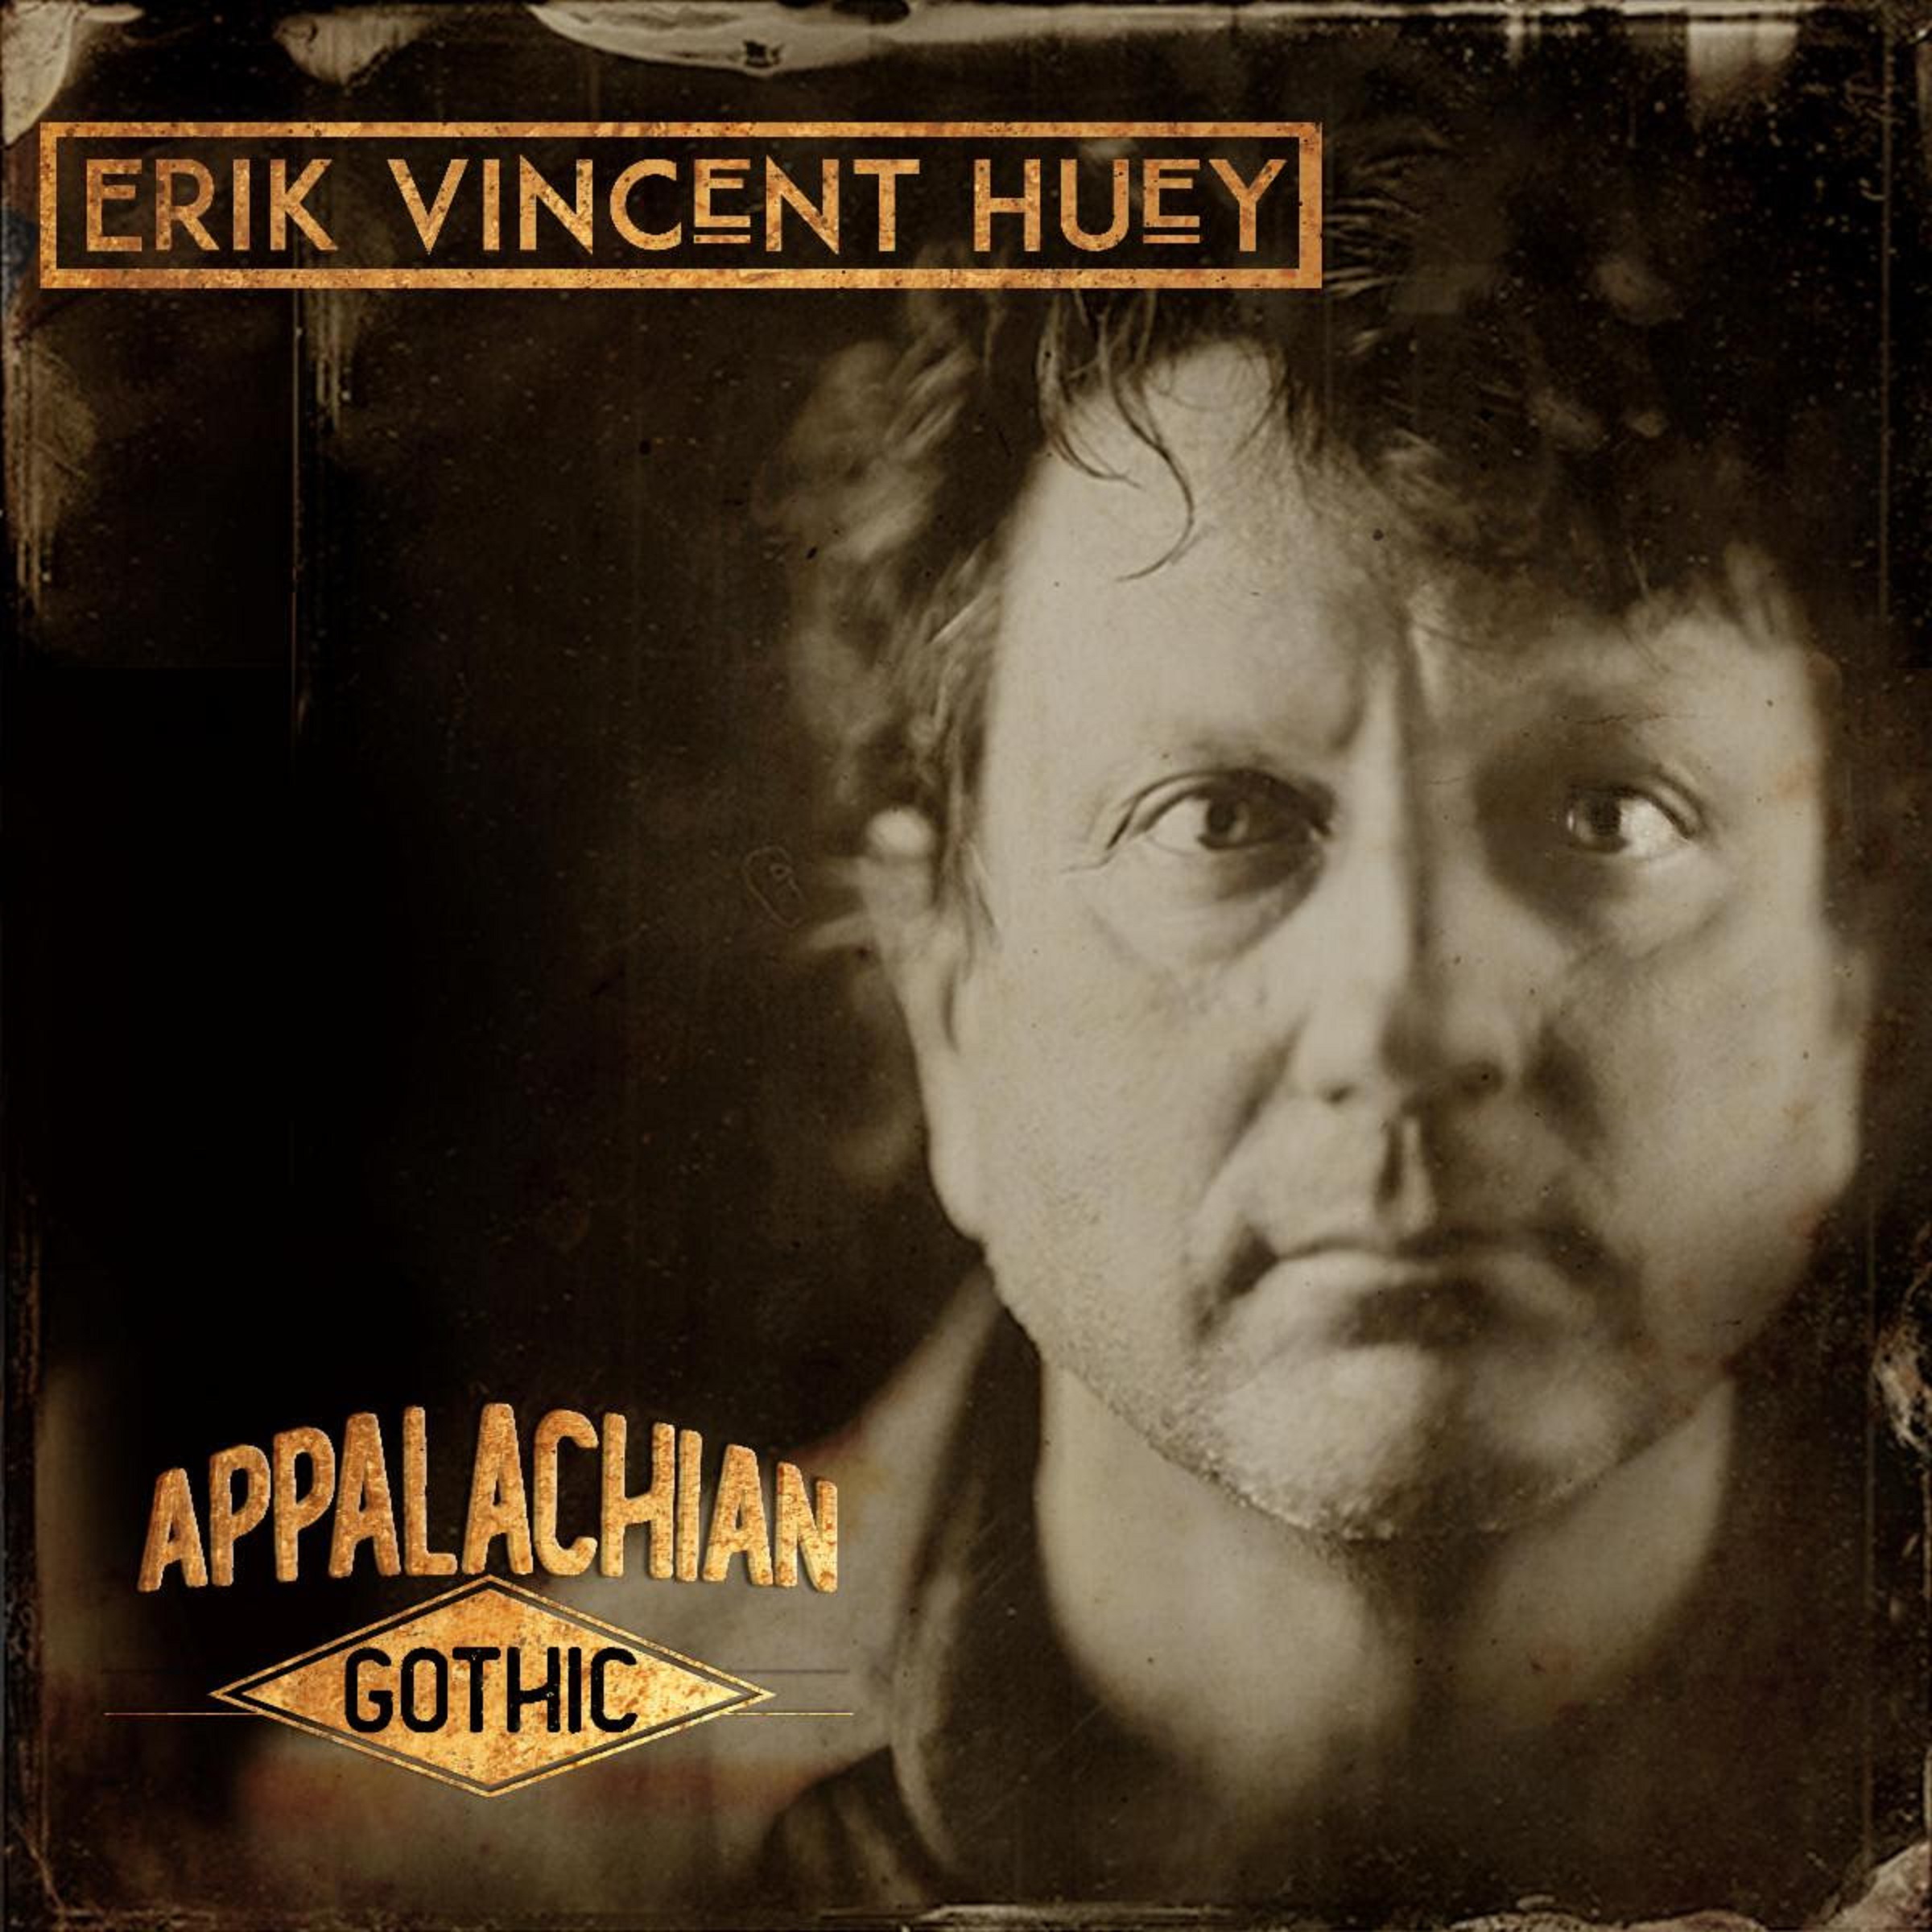 ERIK VINCENT HUEY (Surreal McCoys) releases his debut album, Appalachian Gothic